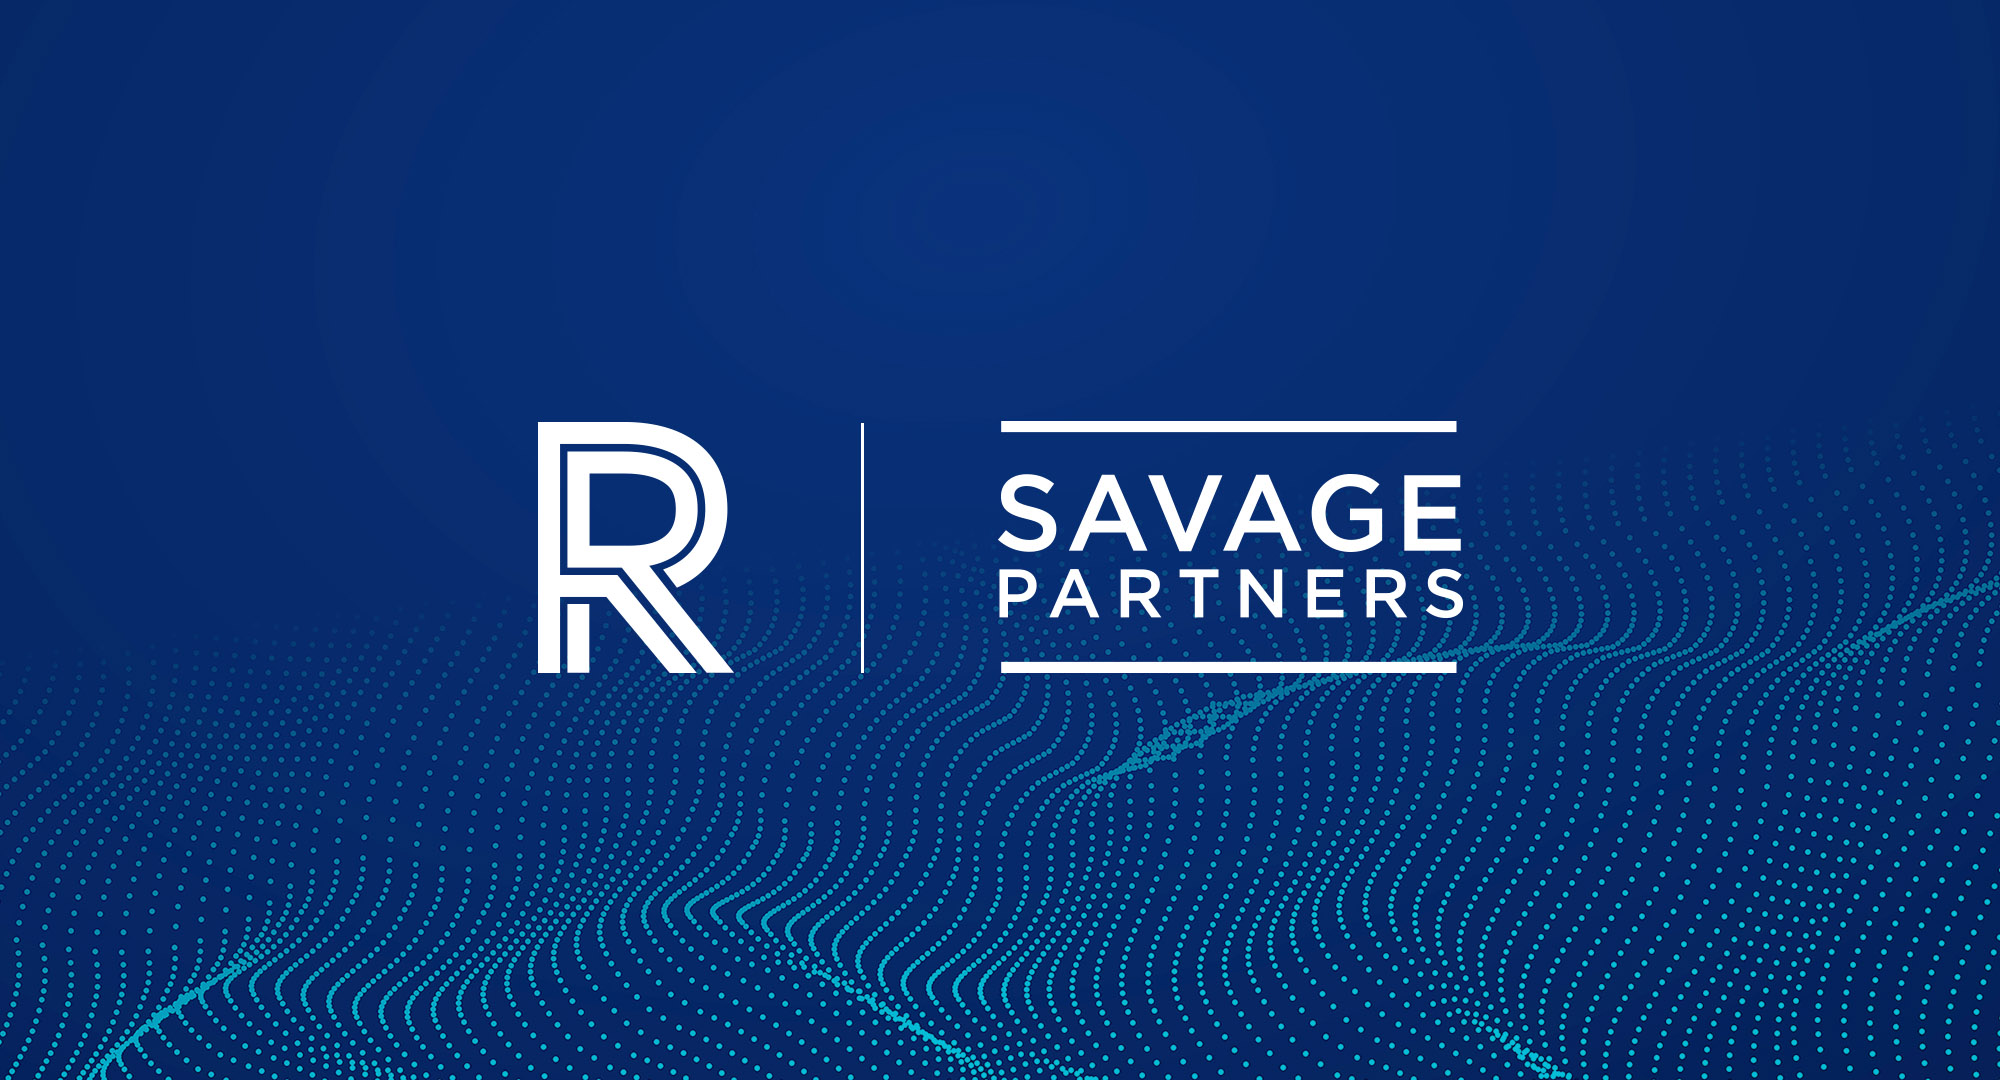 savage-partners-banner.jpg